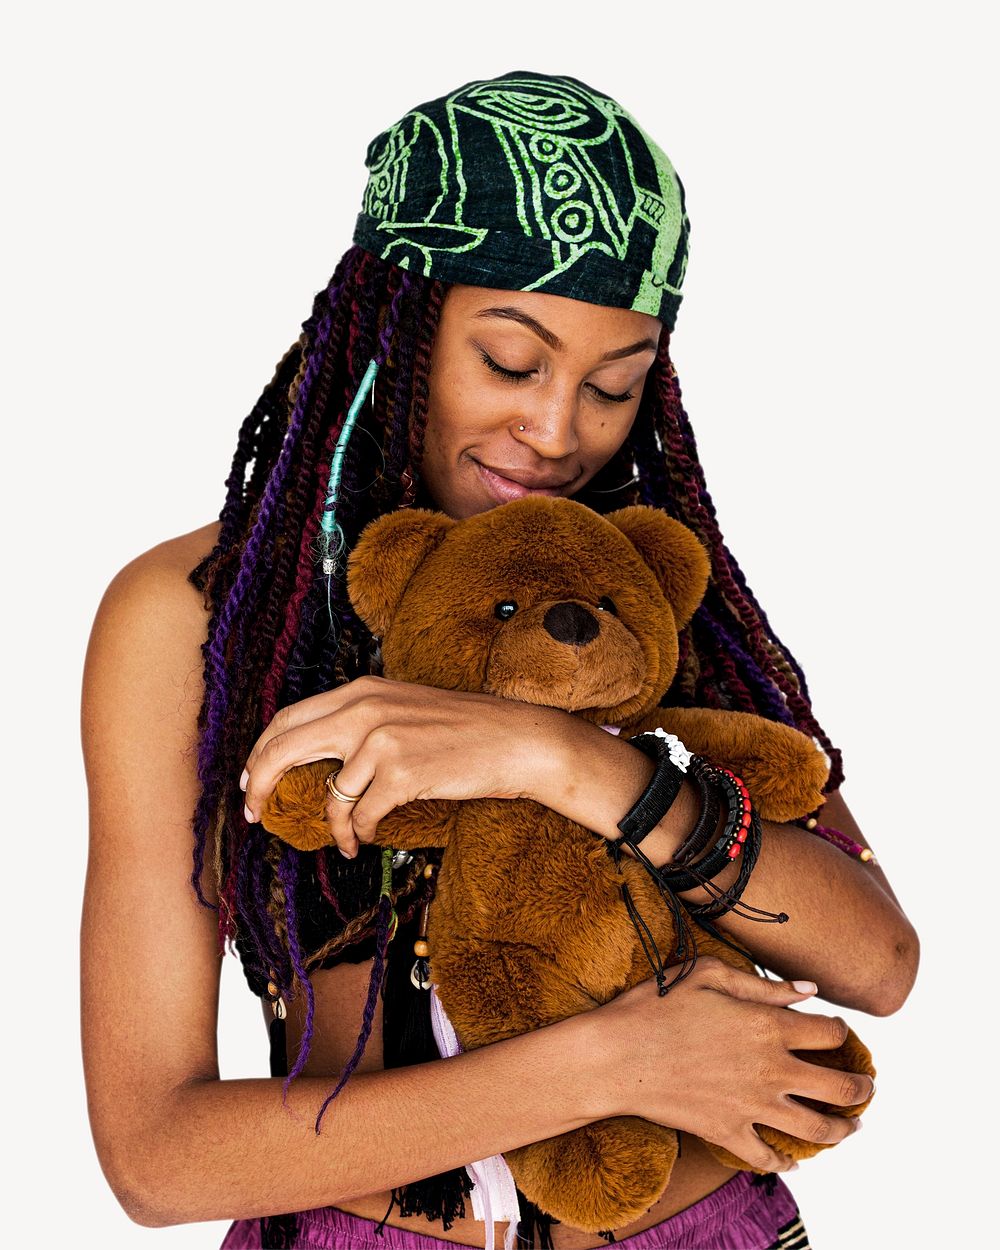 Woman hug teddy bear isolated image on white